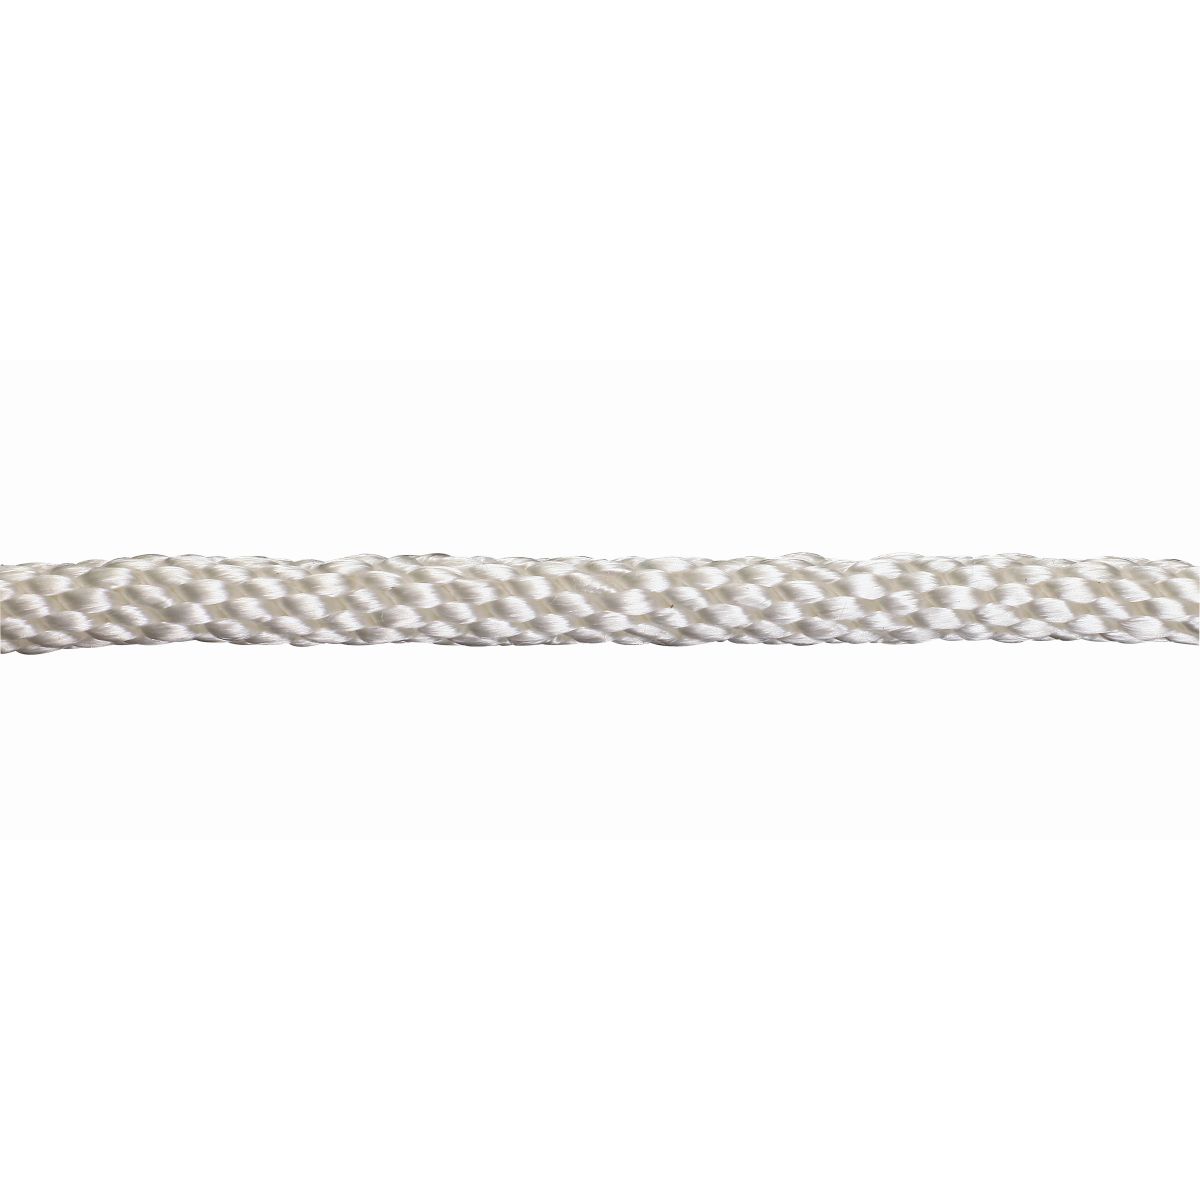 3/8" Solid Braid Nylon Rope